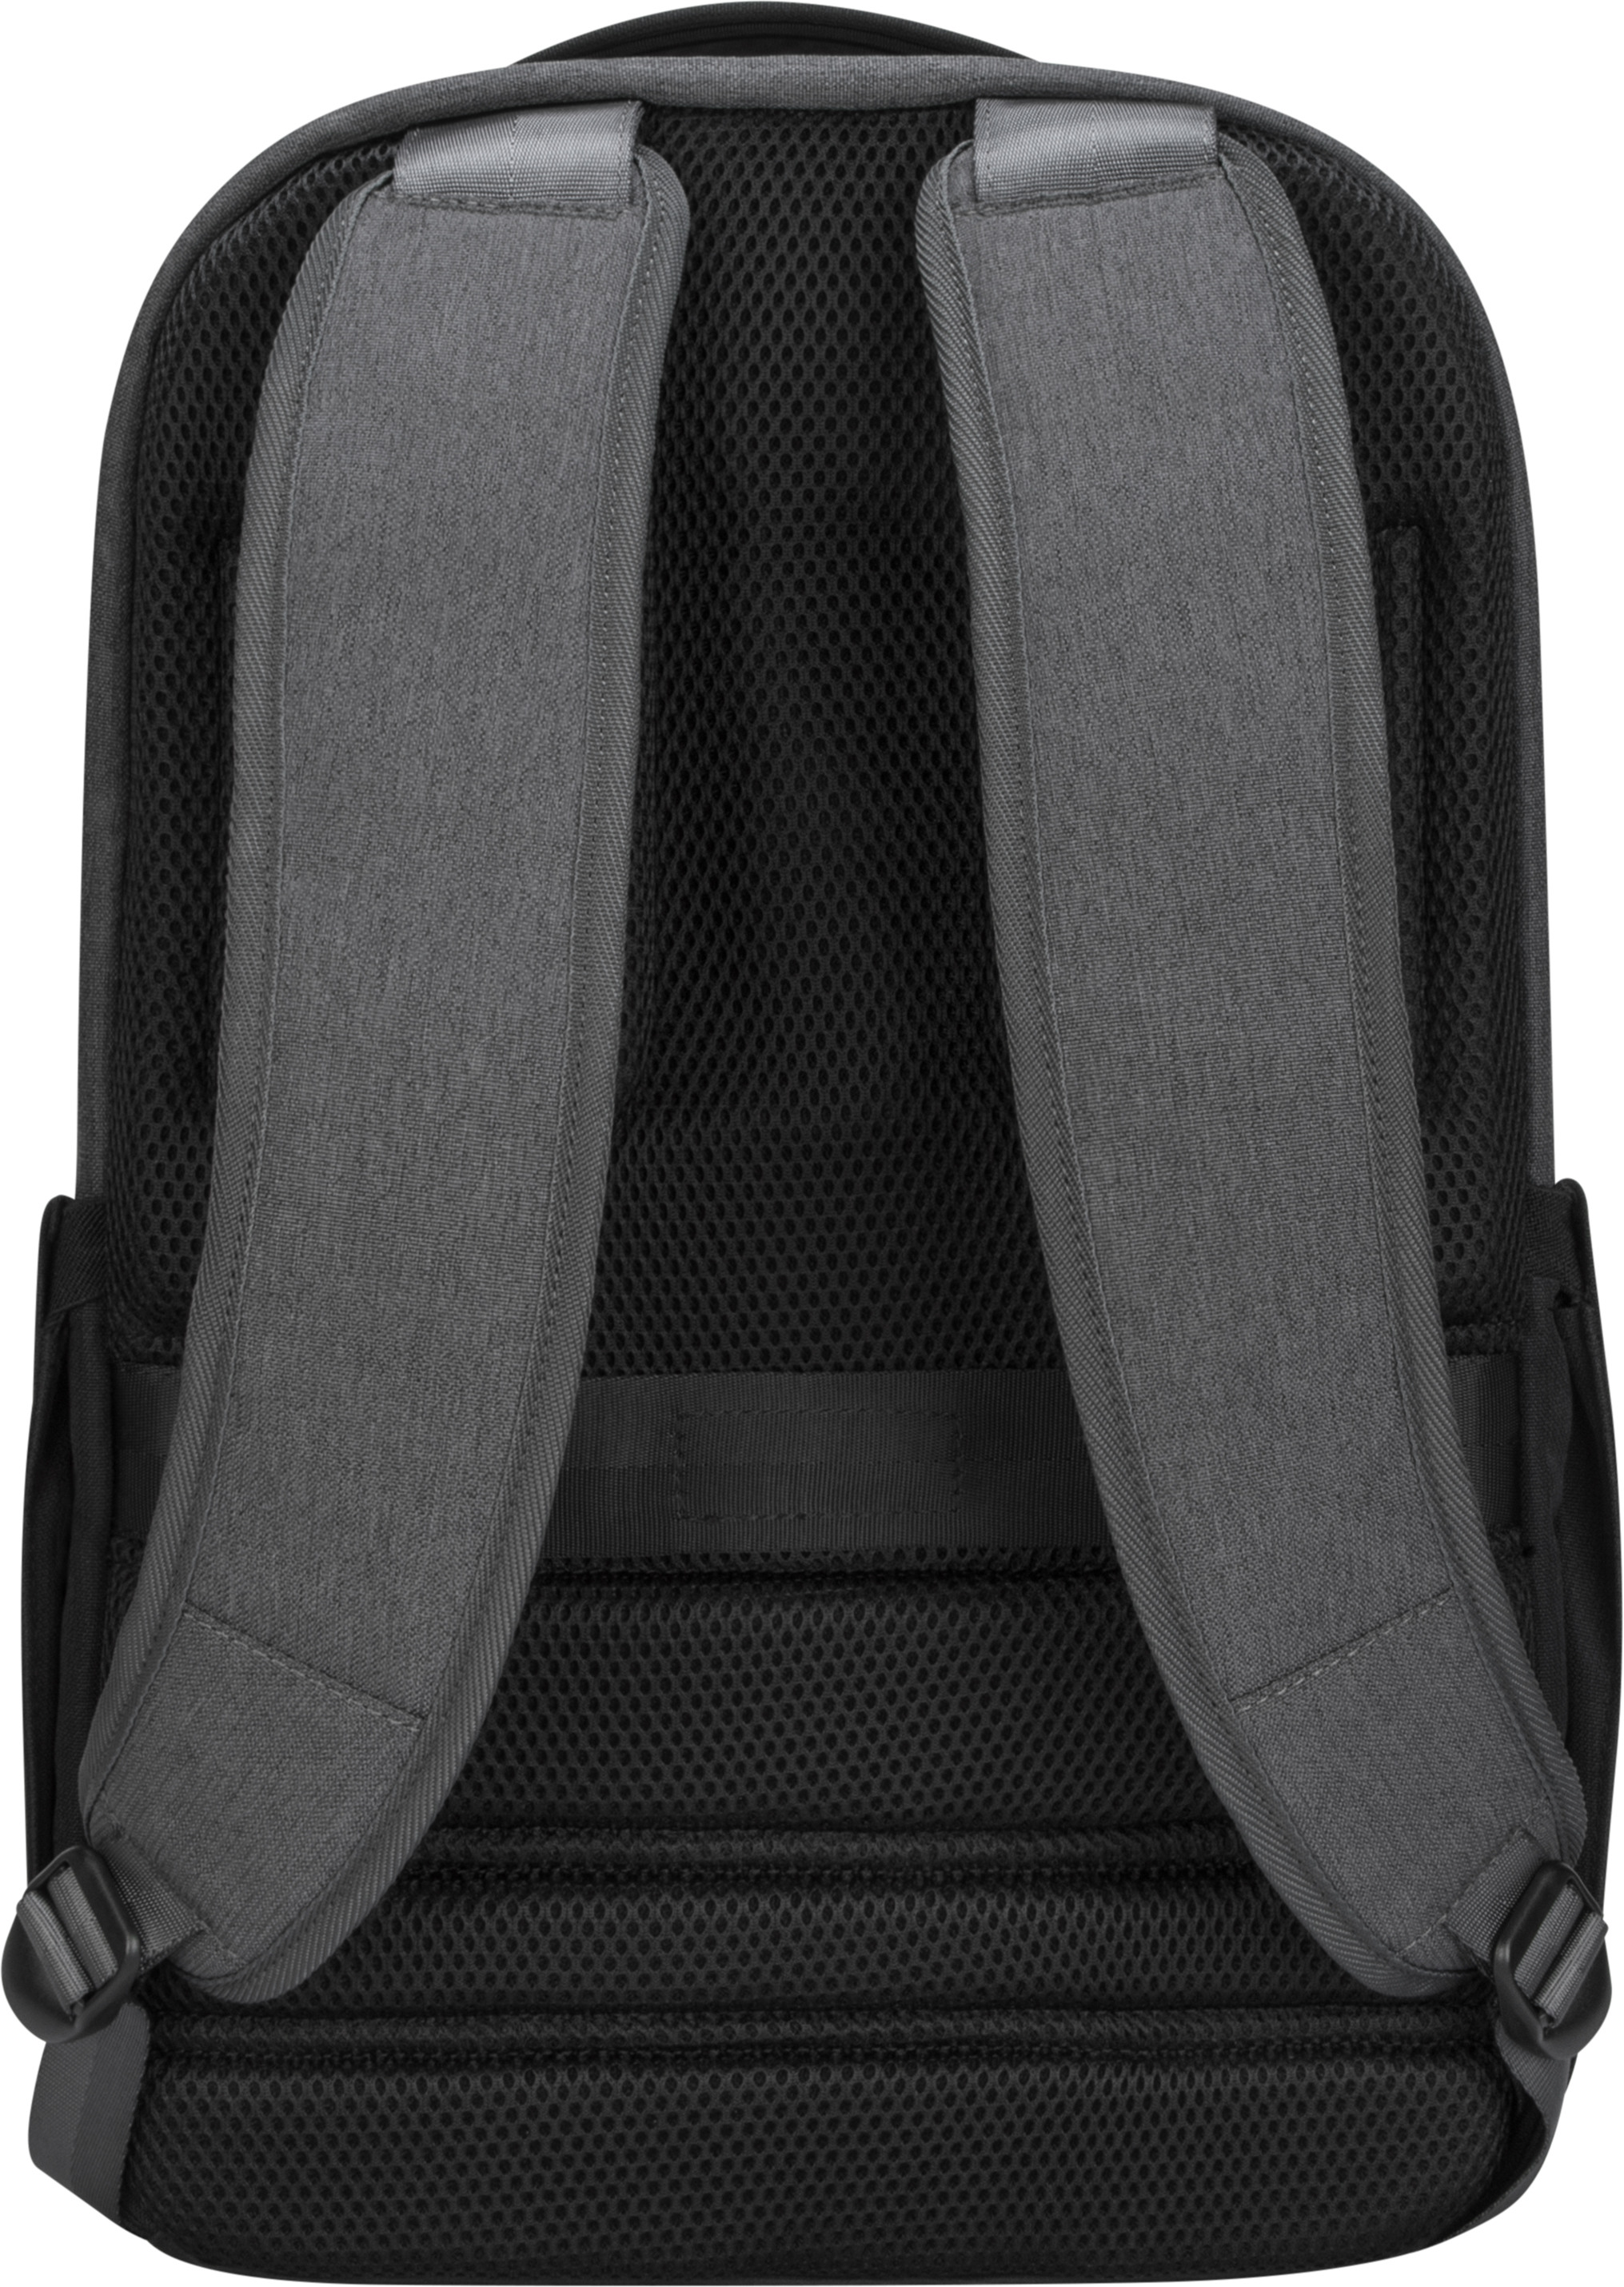 TARGUS Cypress Eco Backpack 15.6inch TBB58602GL Grey